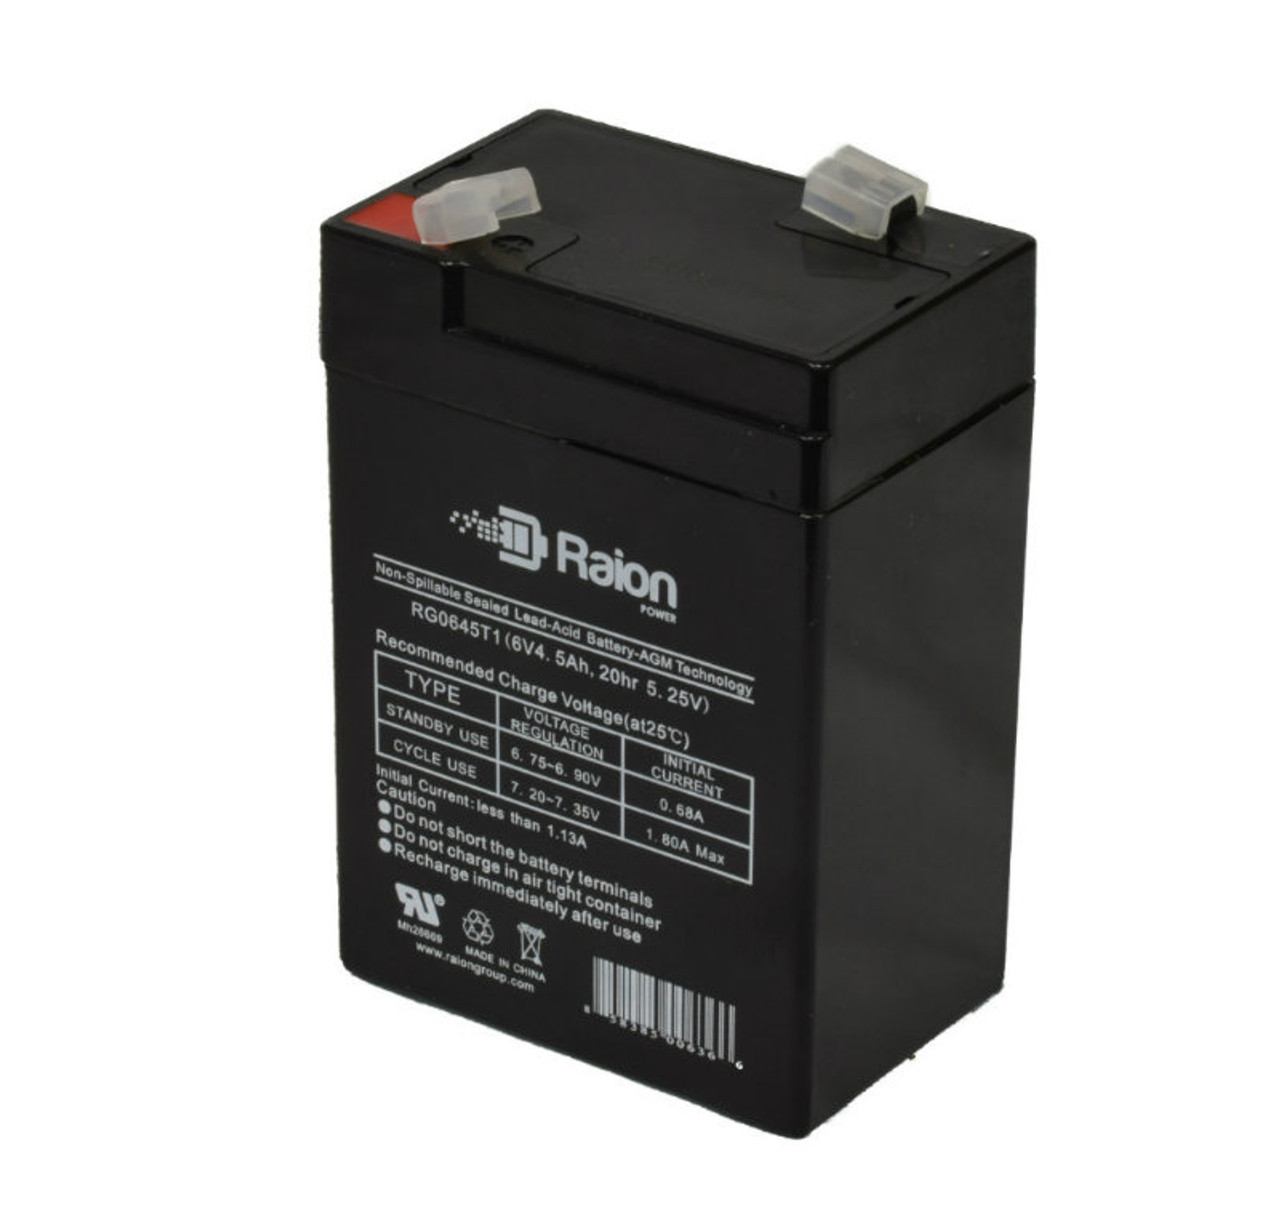 Raion Power RG0645T1 6V 4.5Ah Replacement Battery Cartridge for Emergi-Lite BSMX14R